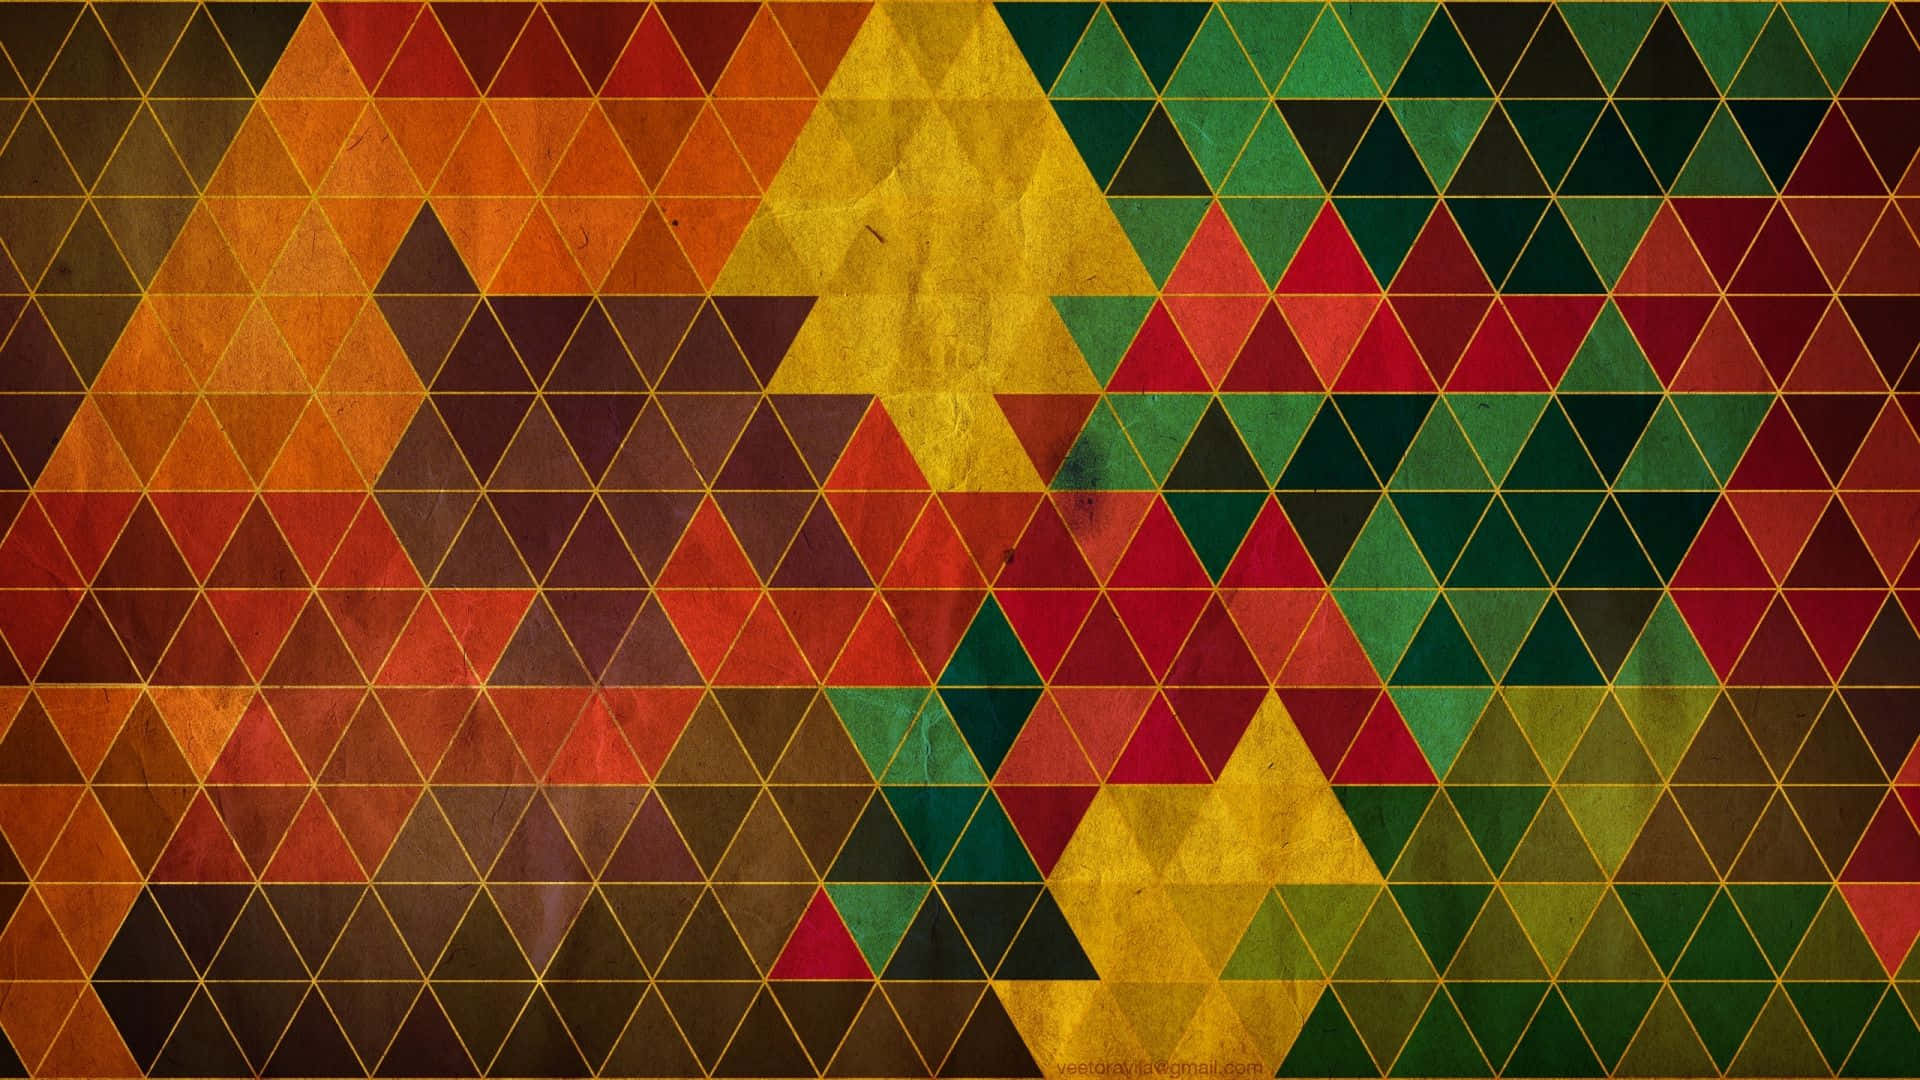 Etflerfarvet Abstrakt Trekantmønster.